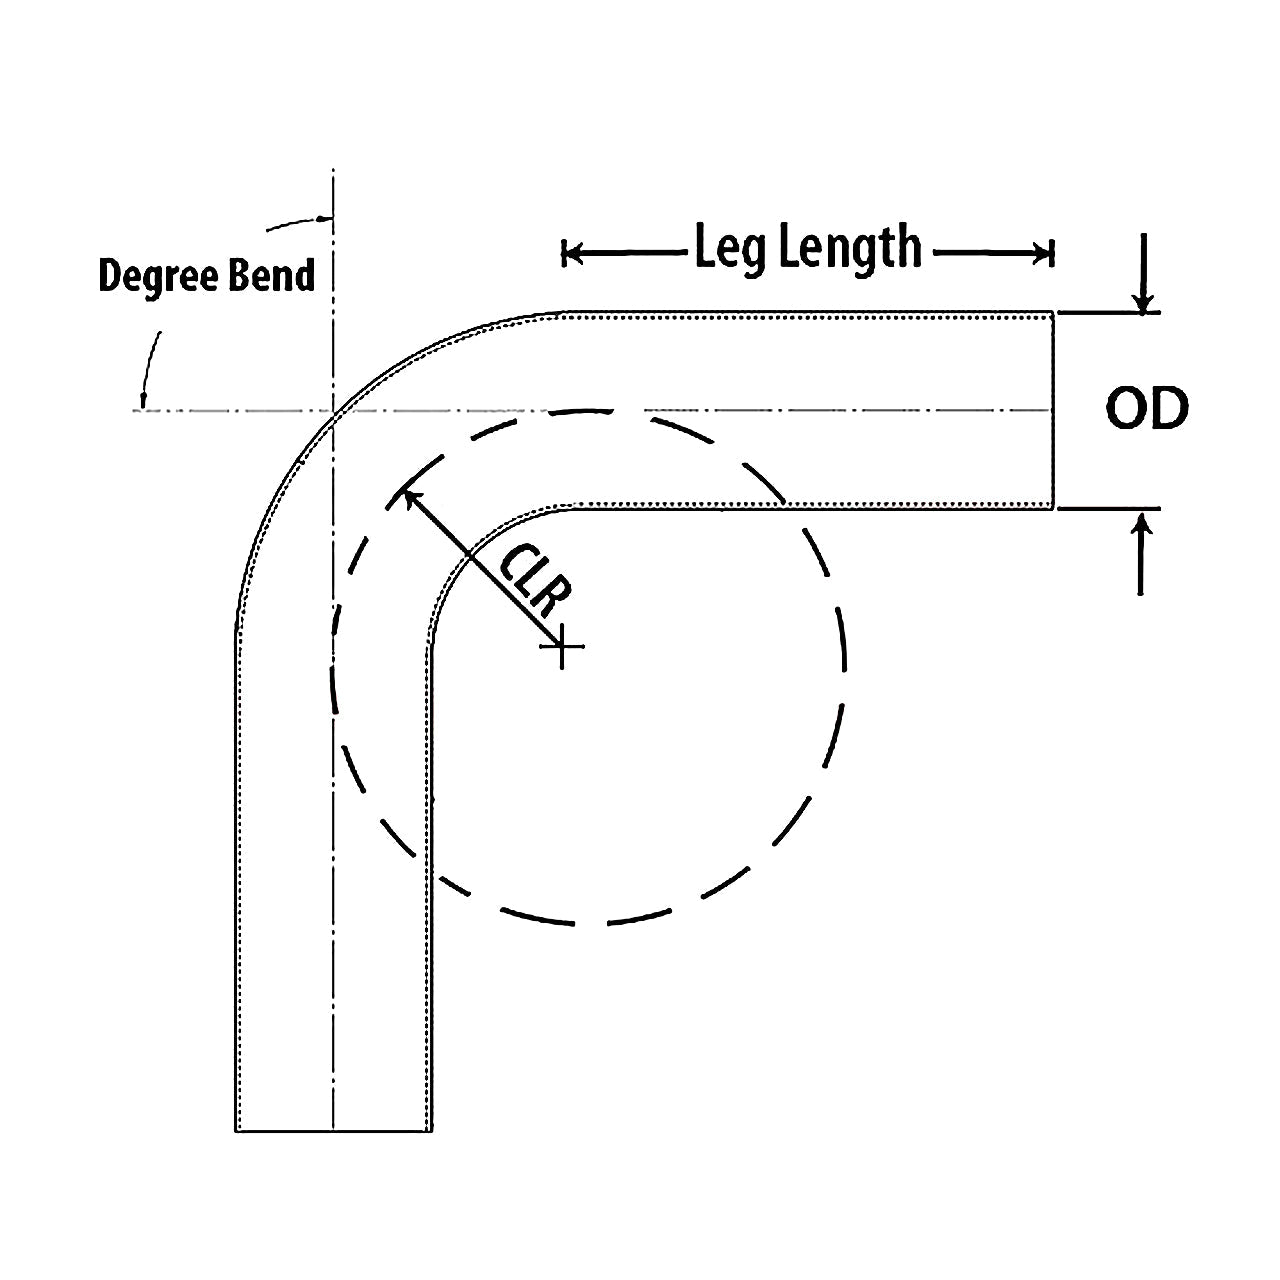 HPS 2" 90 Degree Bend 6061 Aluminum Elbow Pipe Tubing with 3-1/8" Center Line Radius